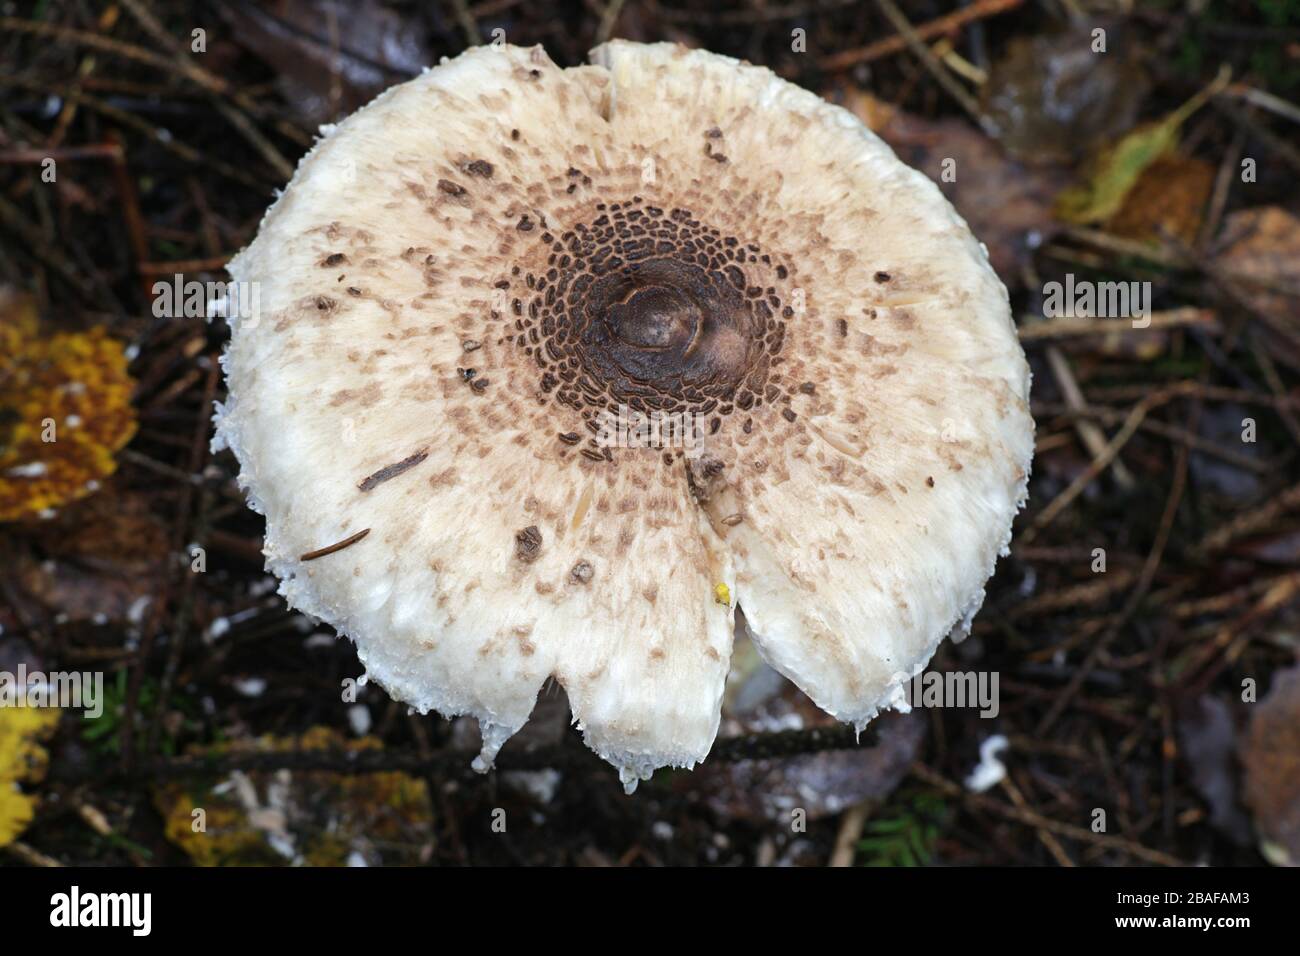 Macrolepiota procera, known as the parasol mushroom, edible fungus from Finland Stock Photo